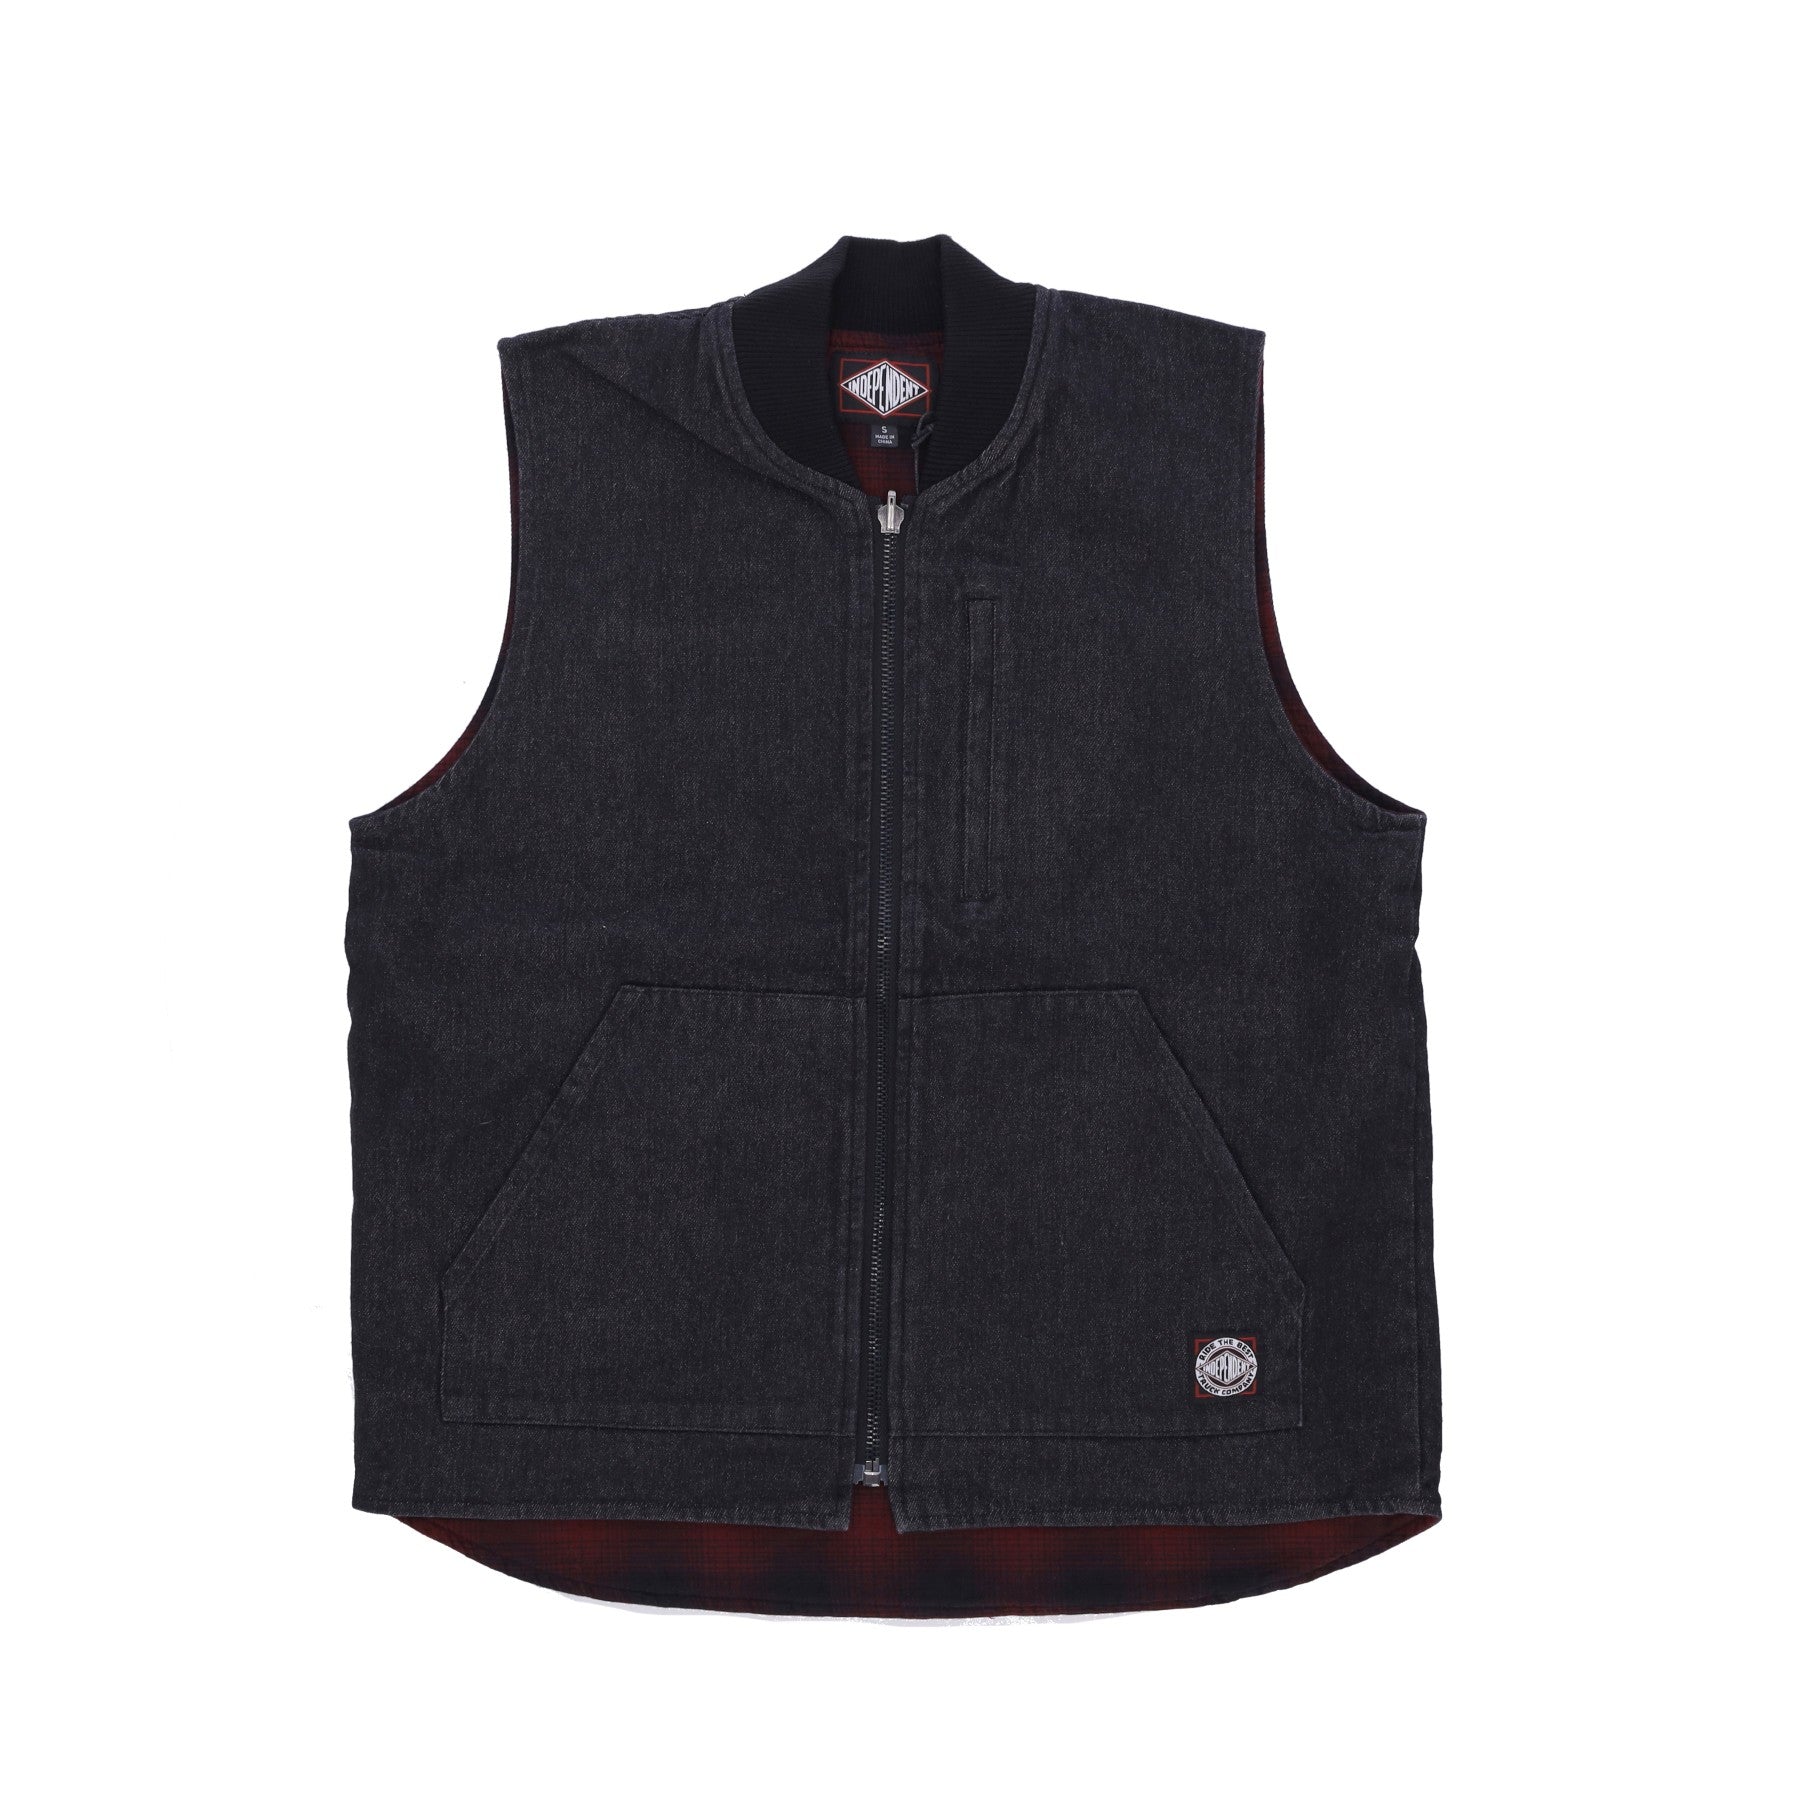 Independent, Smanicato Uomo Halsted Reversible Vest, Black